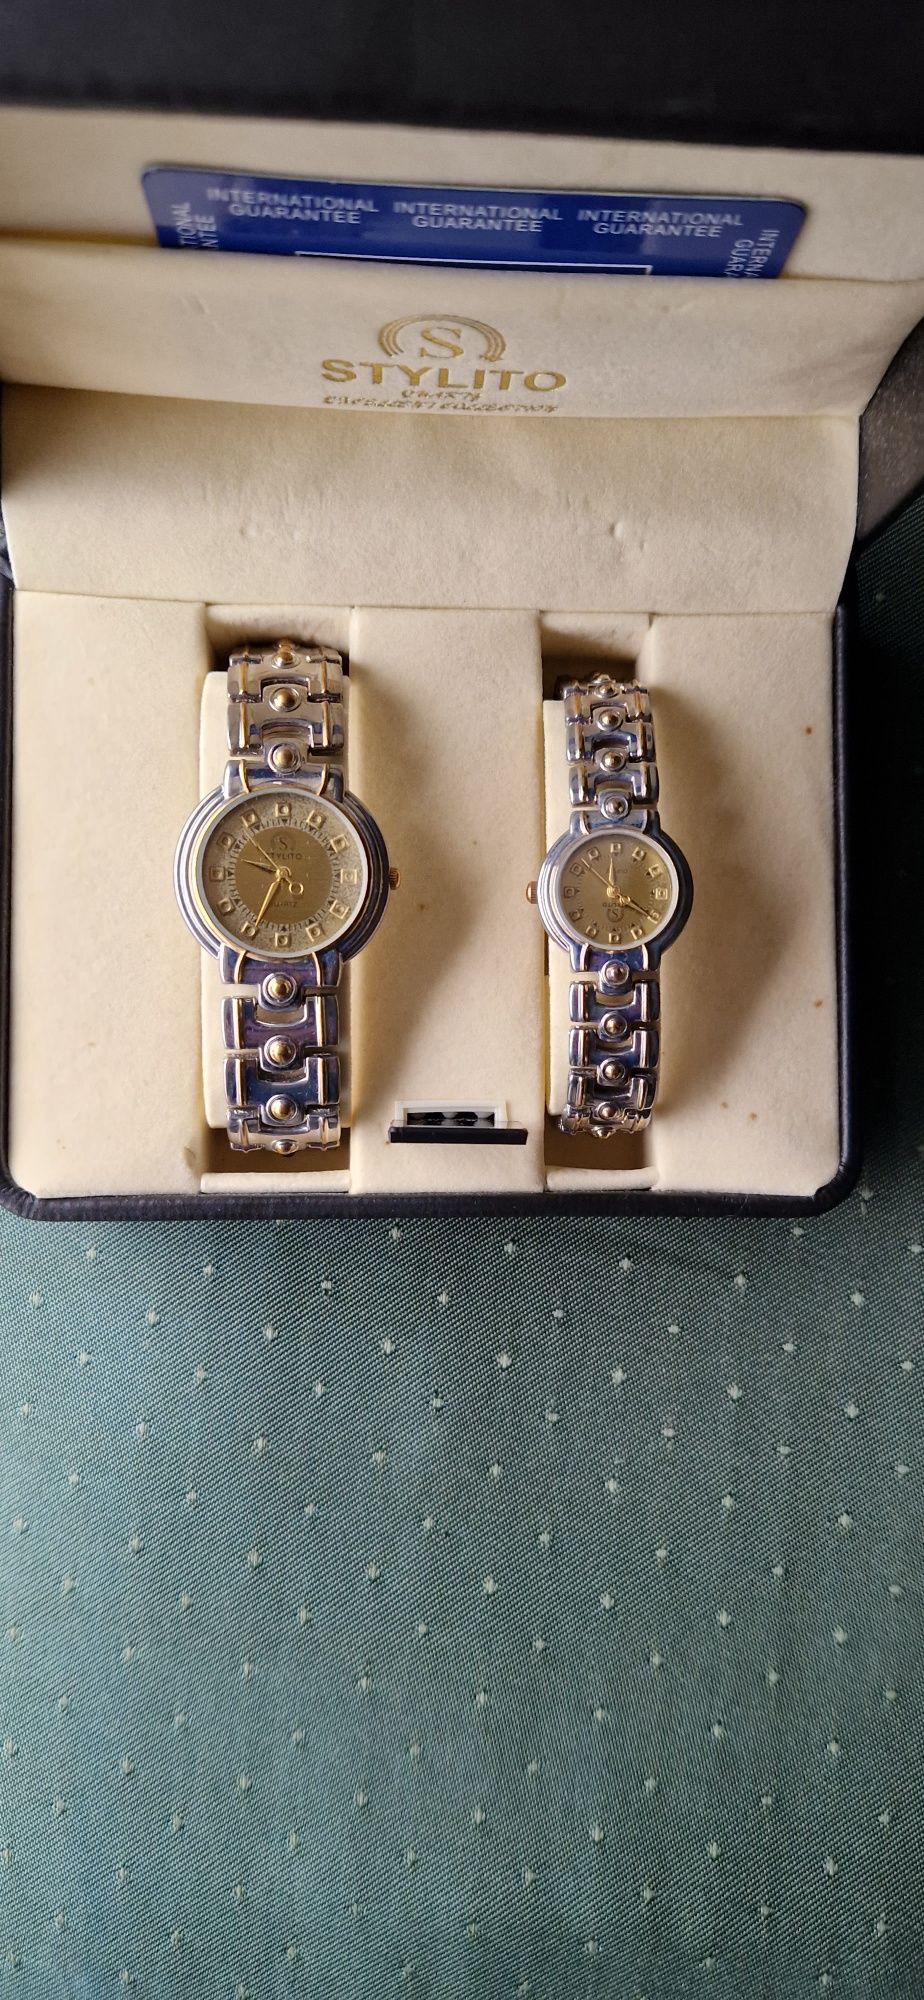 Relógios Stylito Quartz Excellent Collection